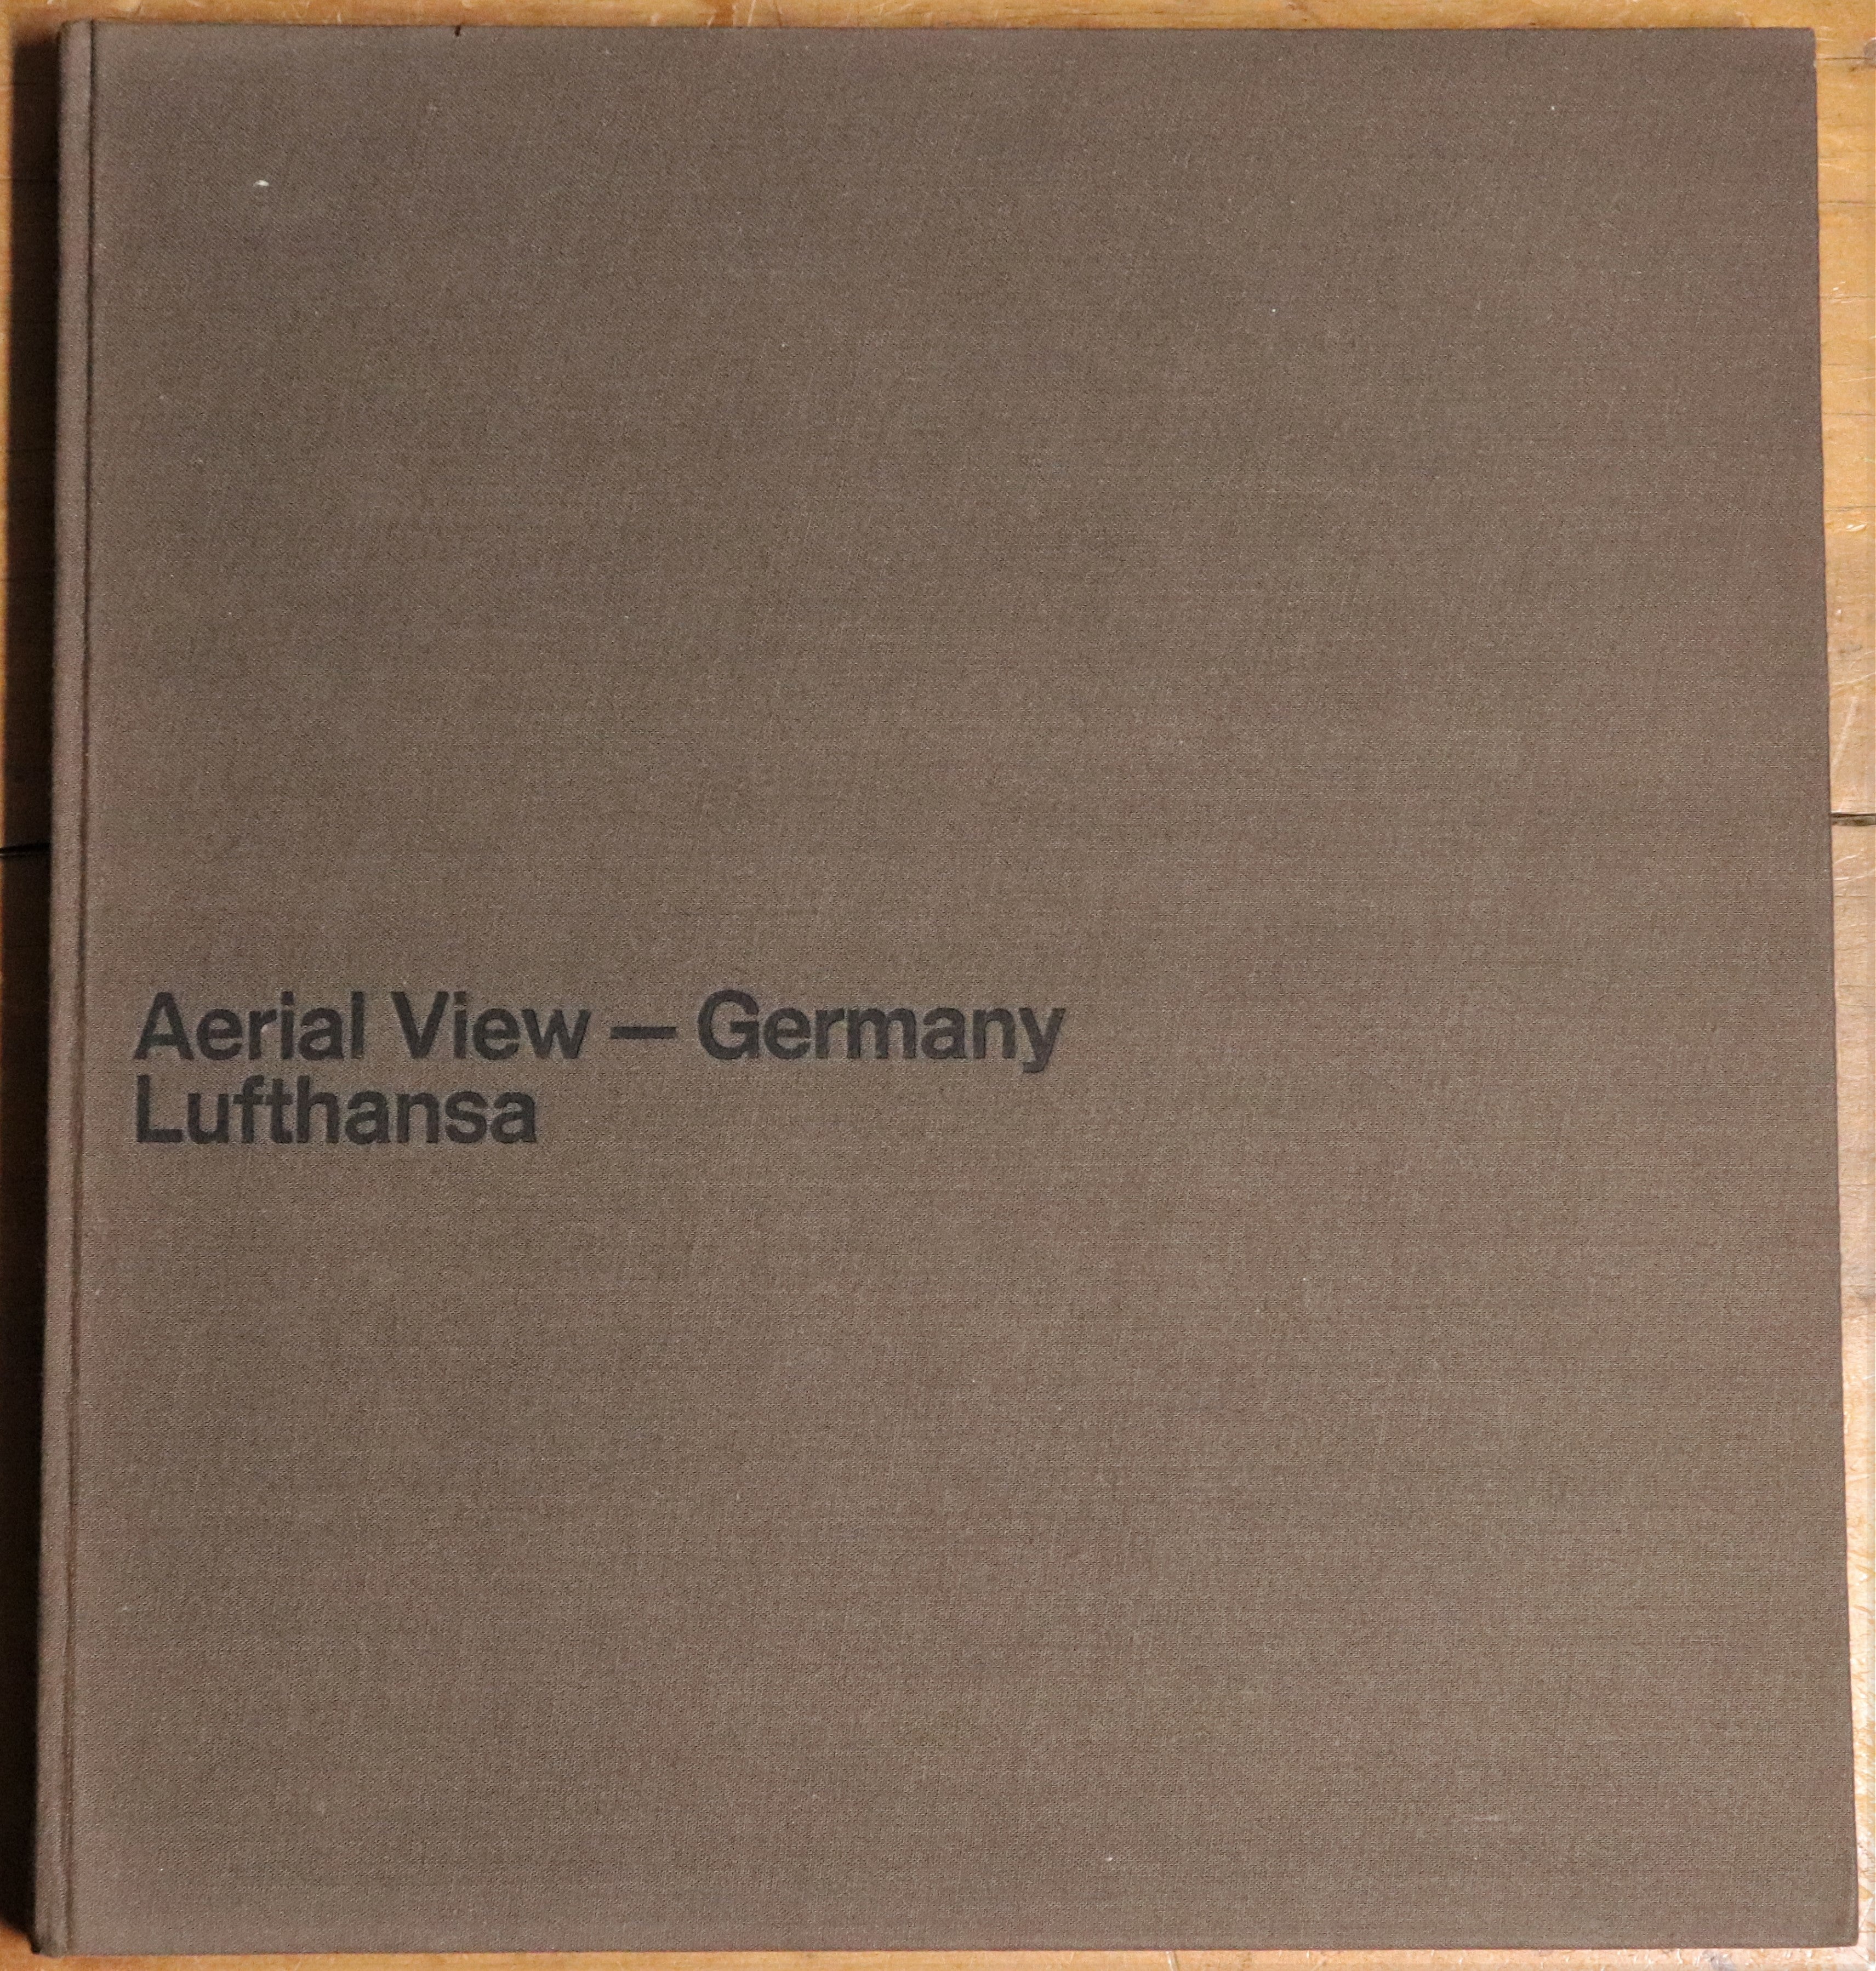 Aerial View Germany - Lufthansa - 1969 - Vintage German Photo History Book